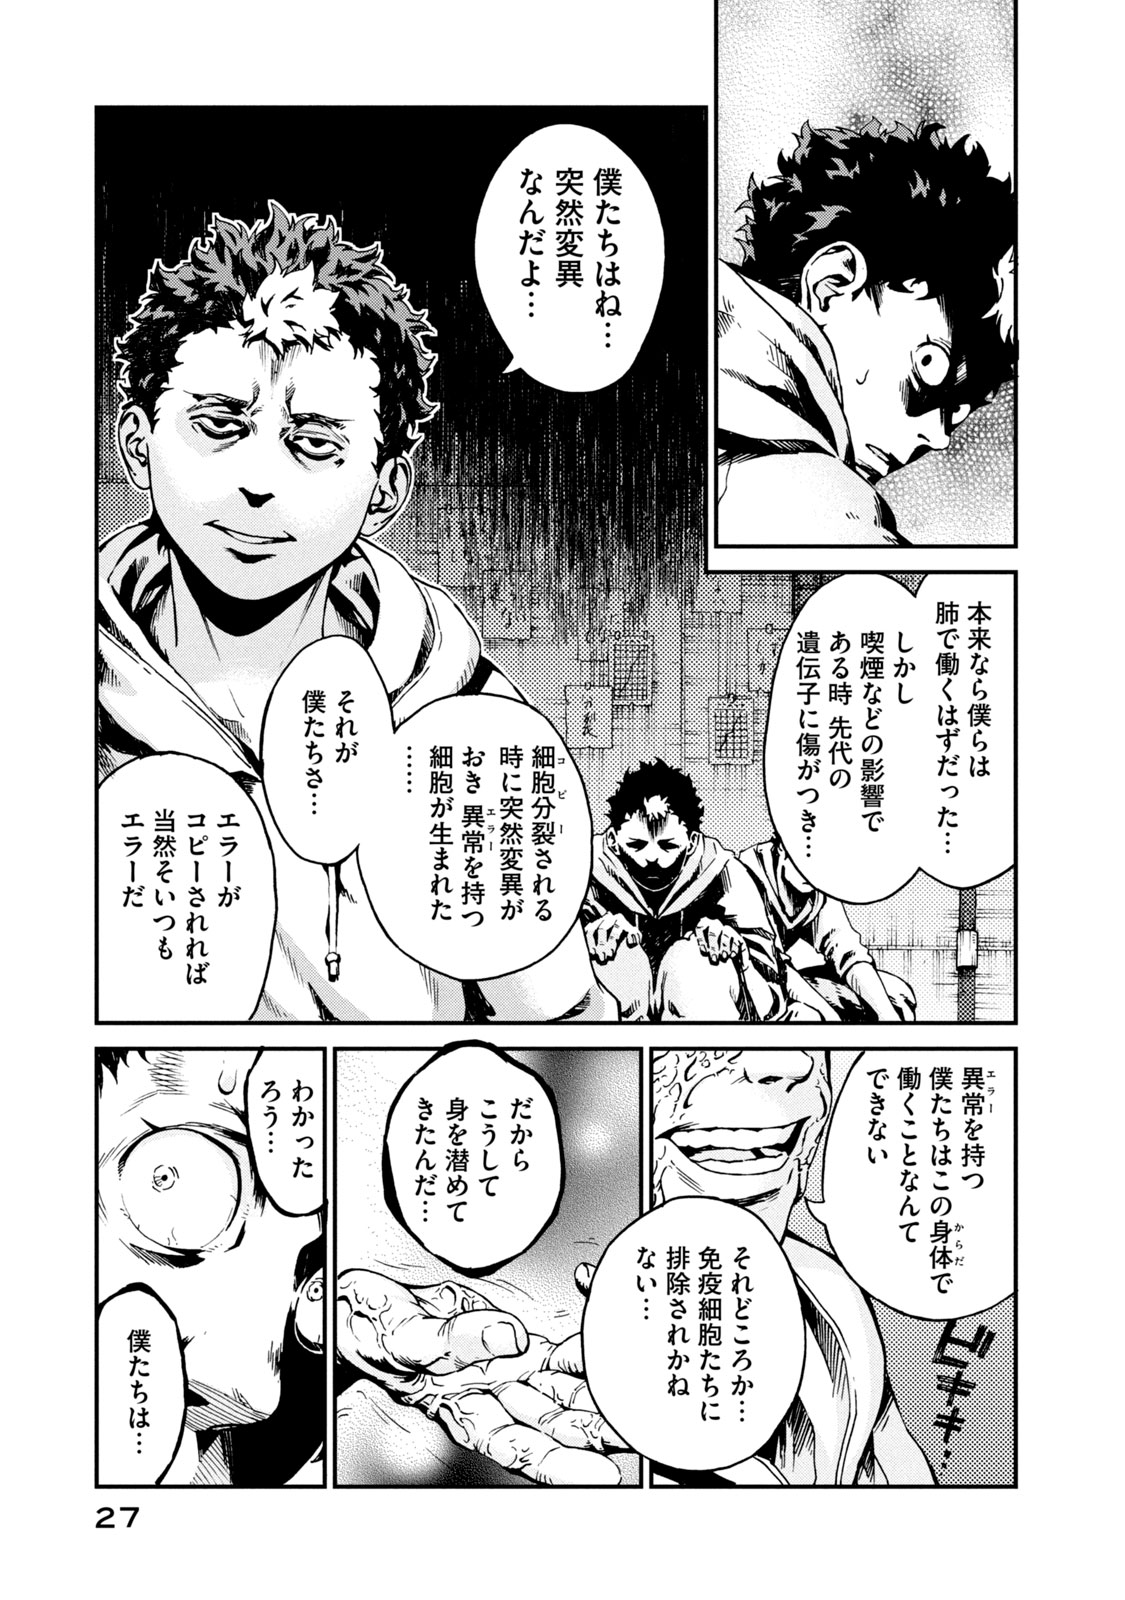 Hataraku Saibou BLACK - Chapter 37 - Page 29